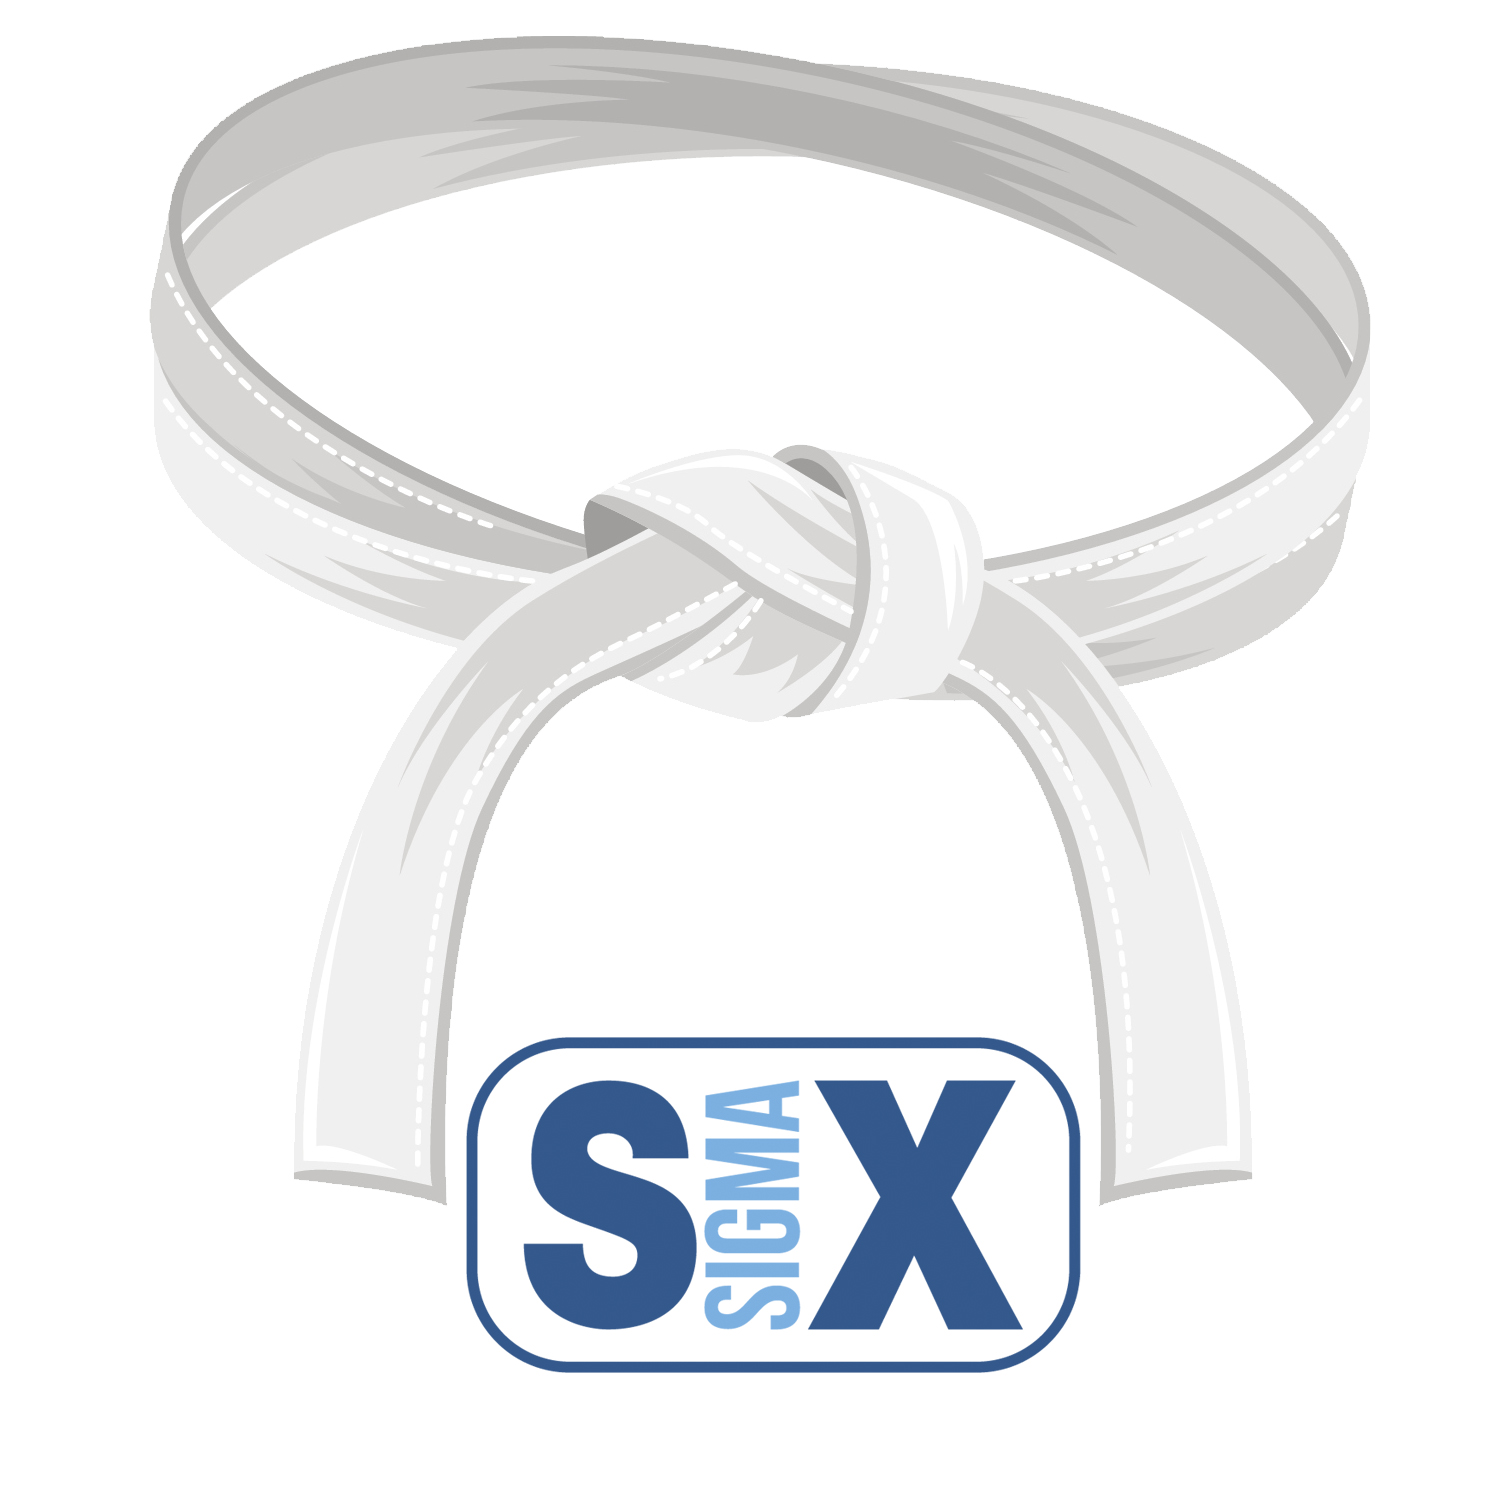 Best Of white belt six sigma Boston white belt